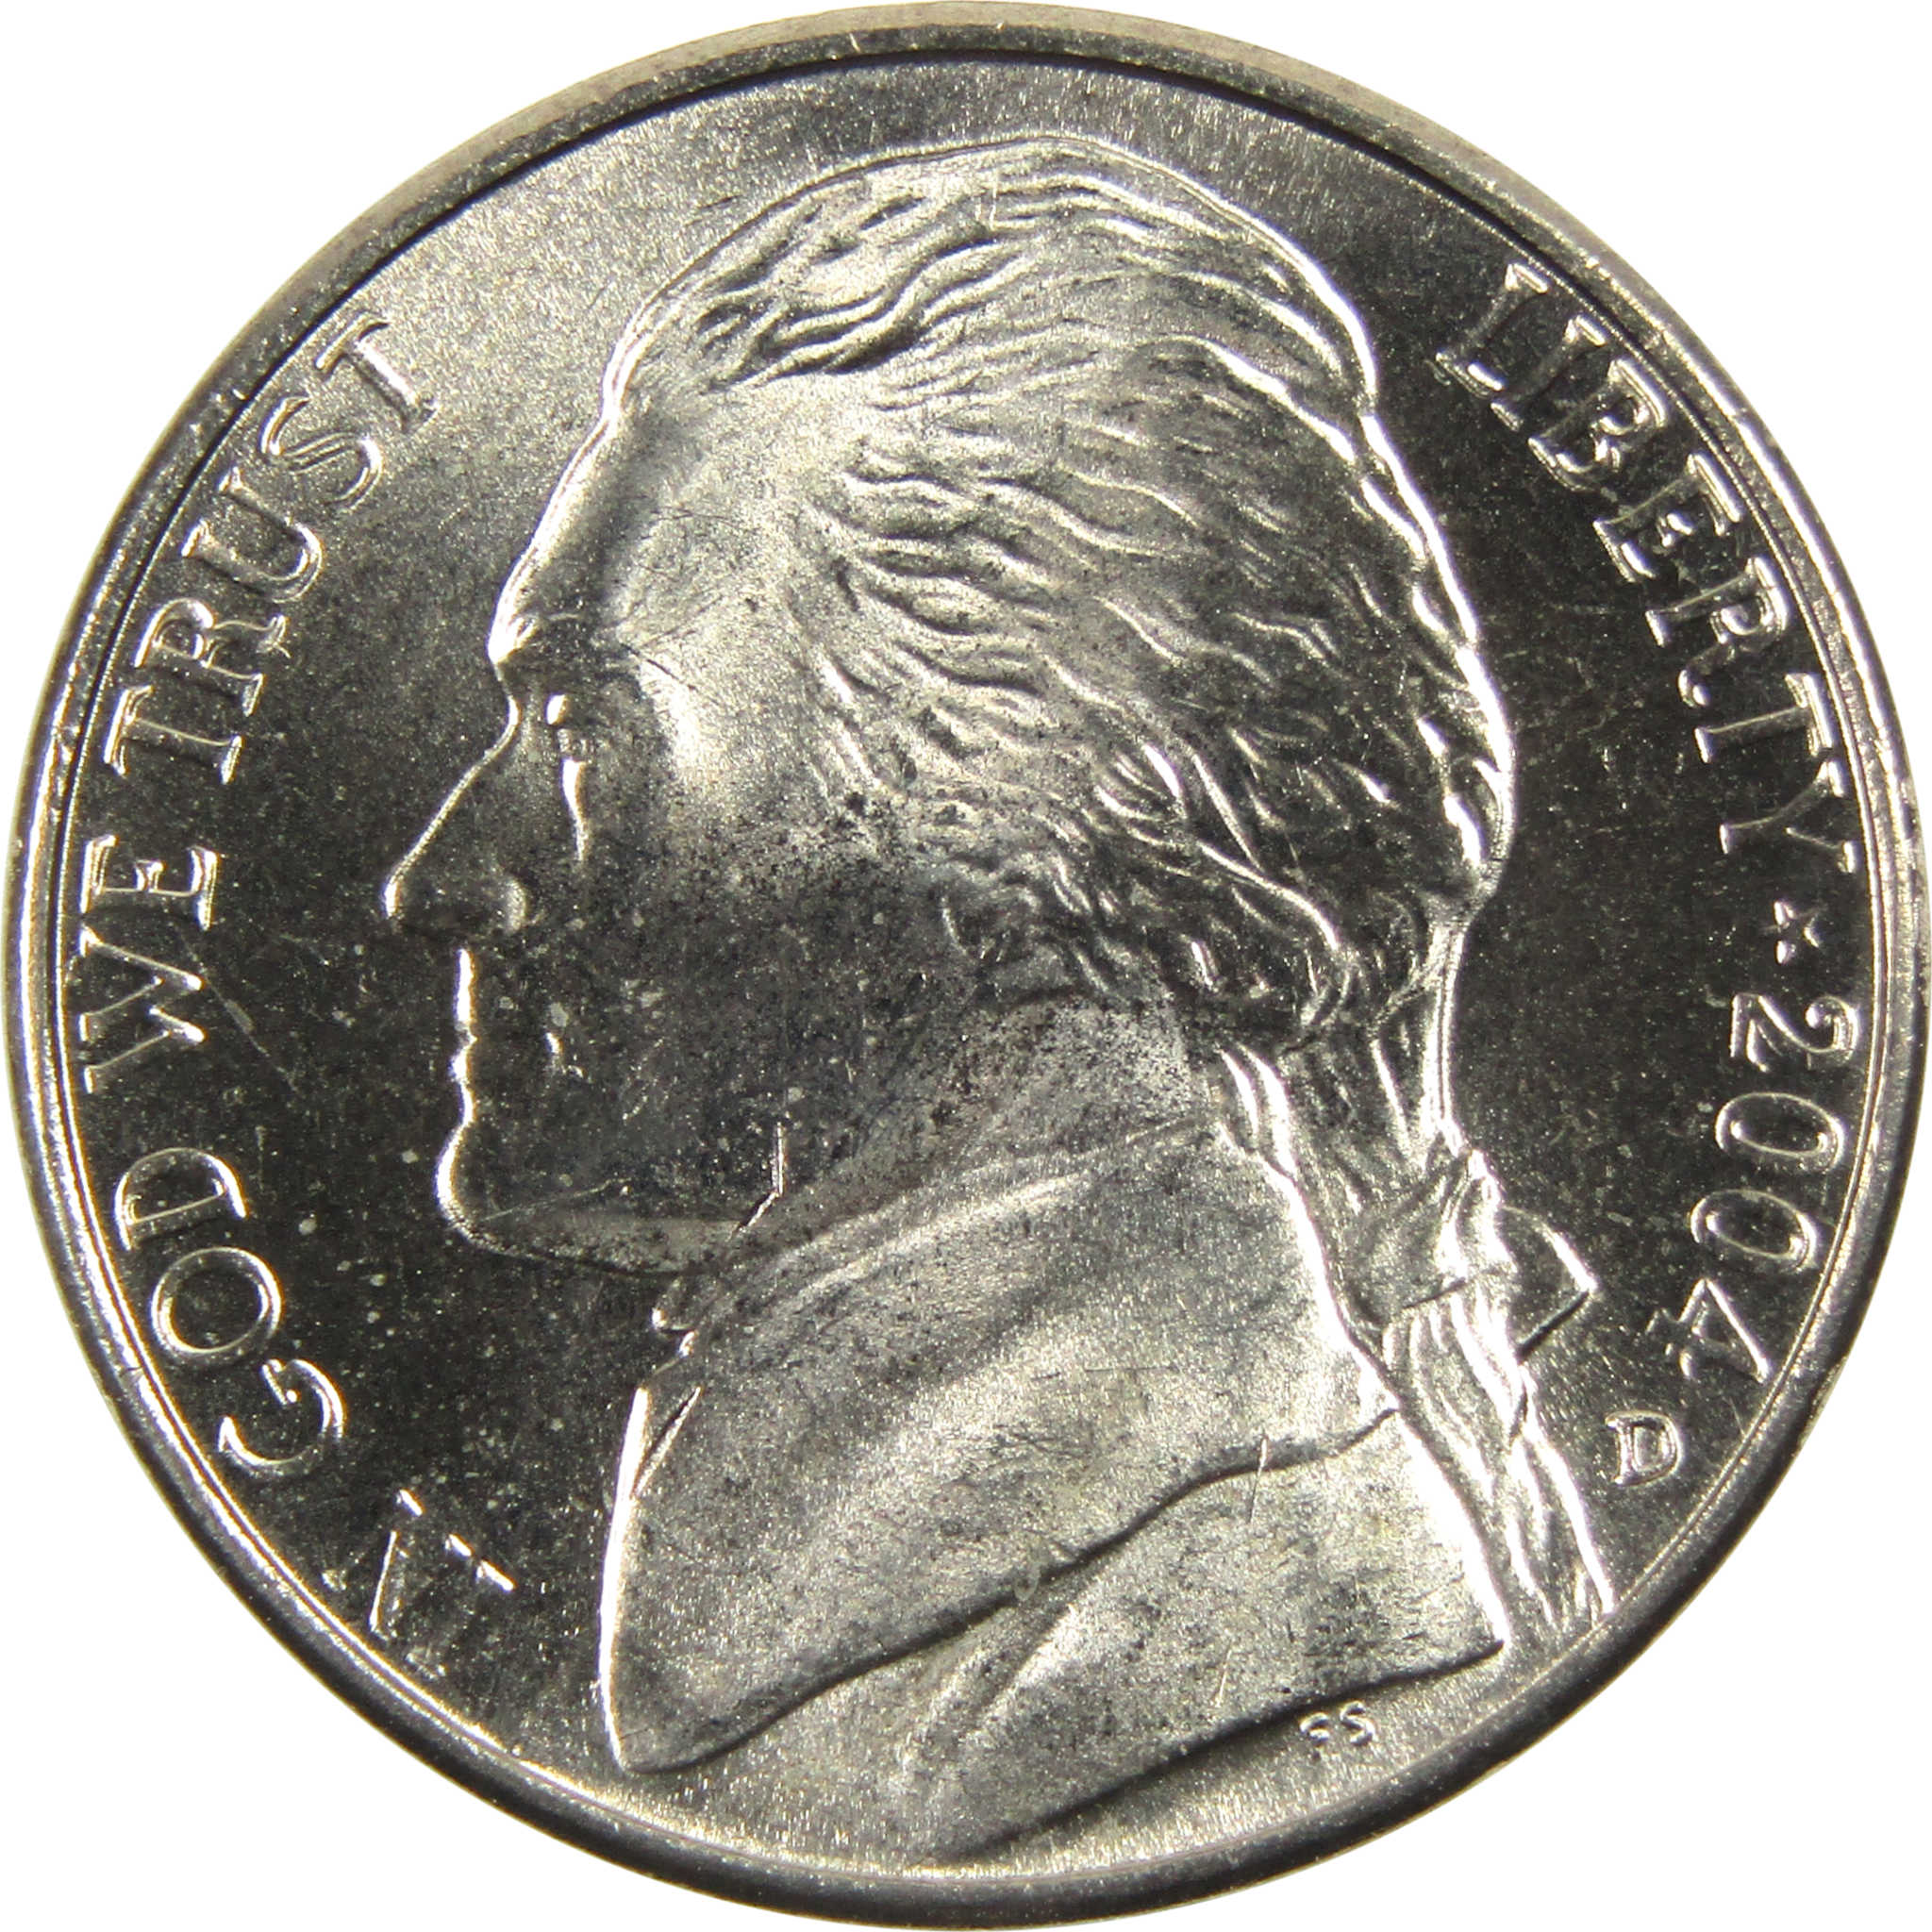 2004 D Keelboat Jefferson Nickel BU Uncirculated 5c Coin